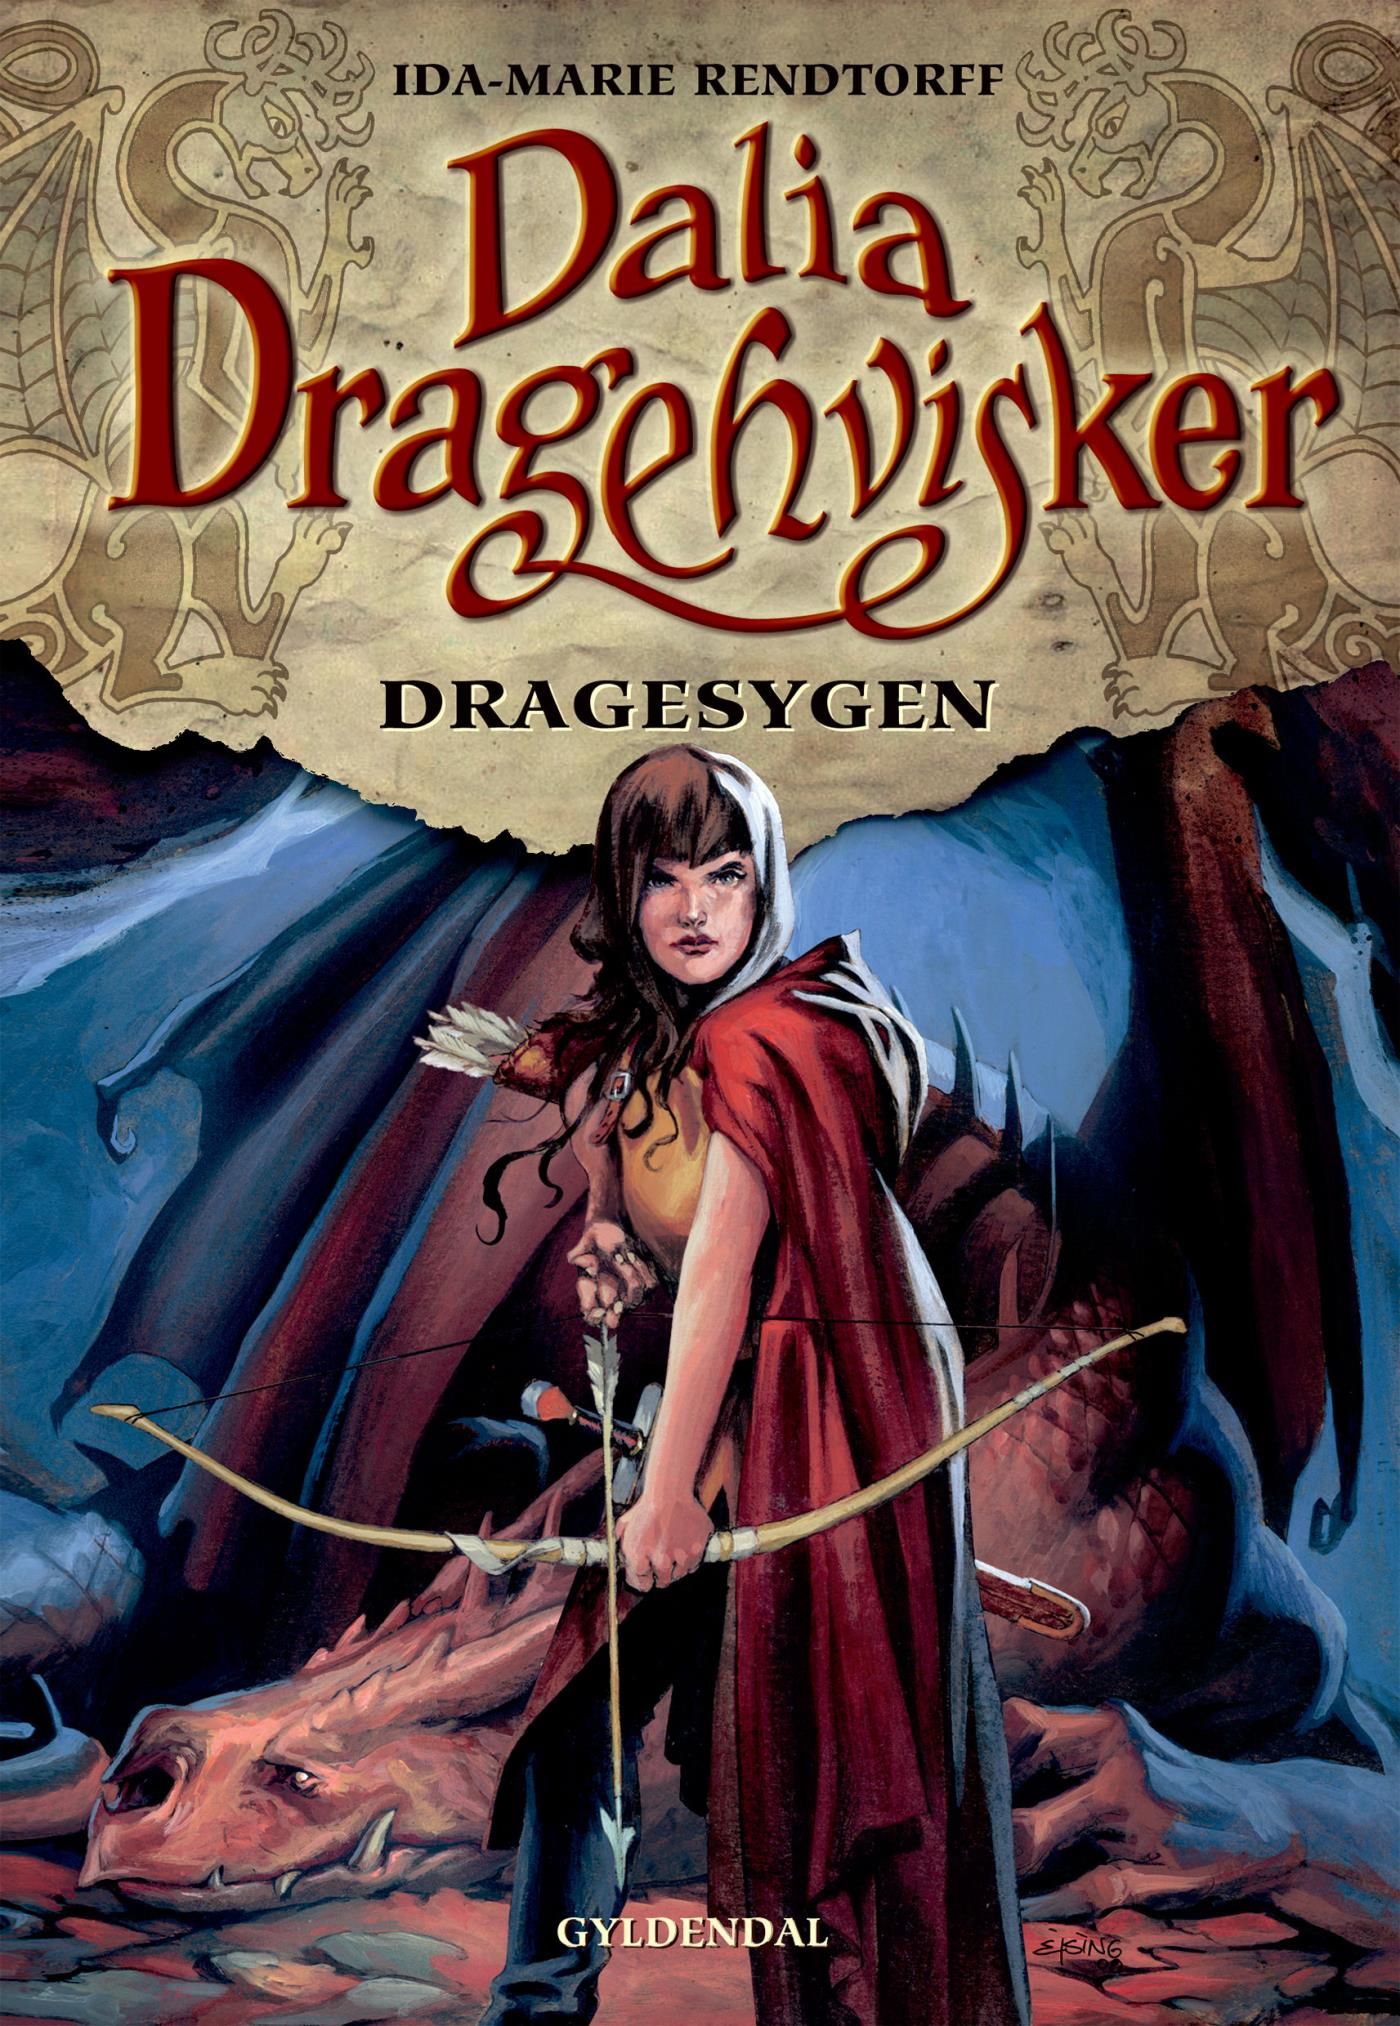 Dalia Dragehvisker 1 - Dragesygen, eBook by Ida-Marie Rendtorff